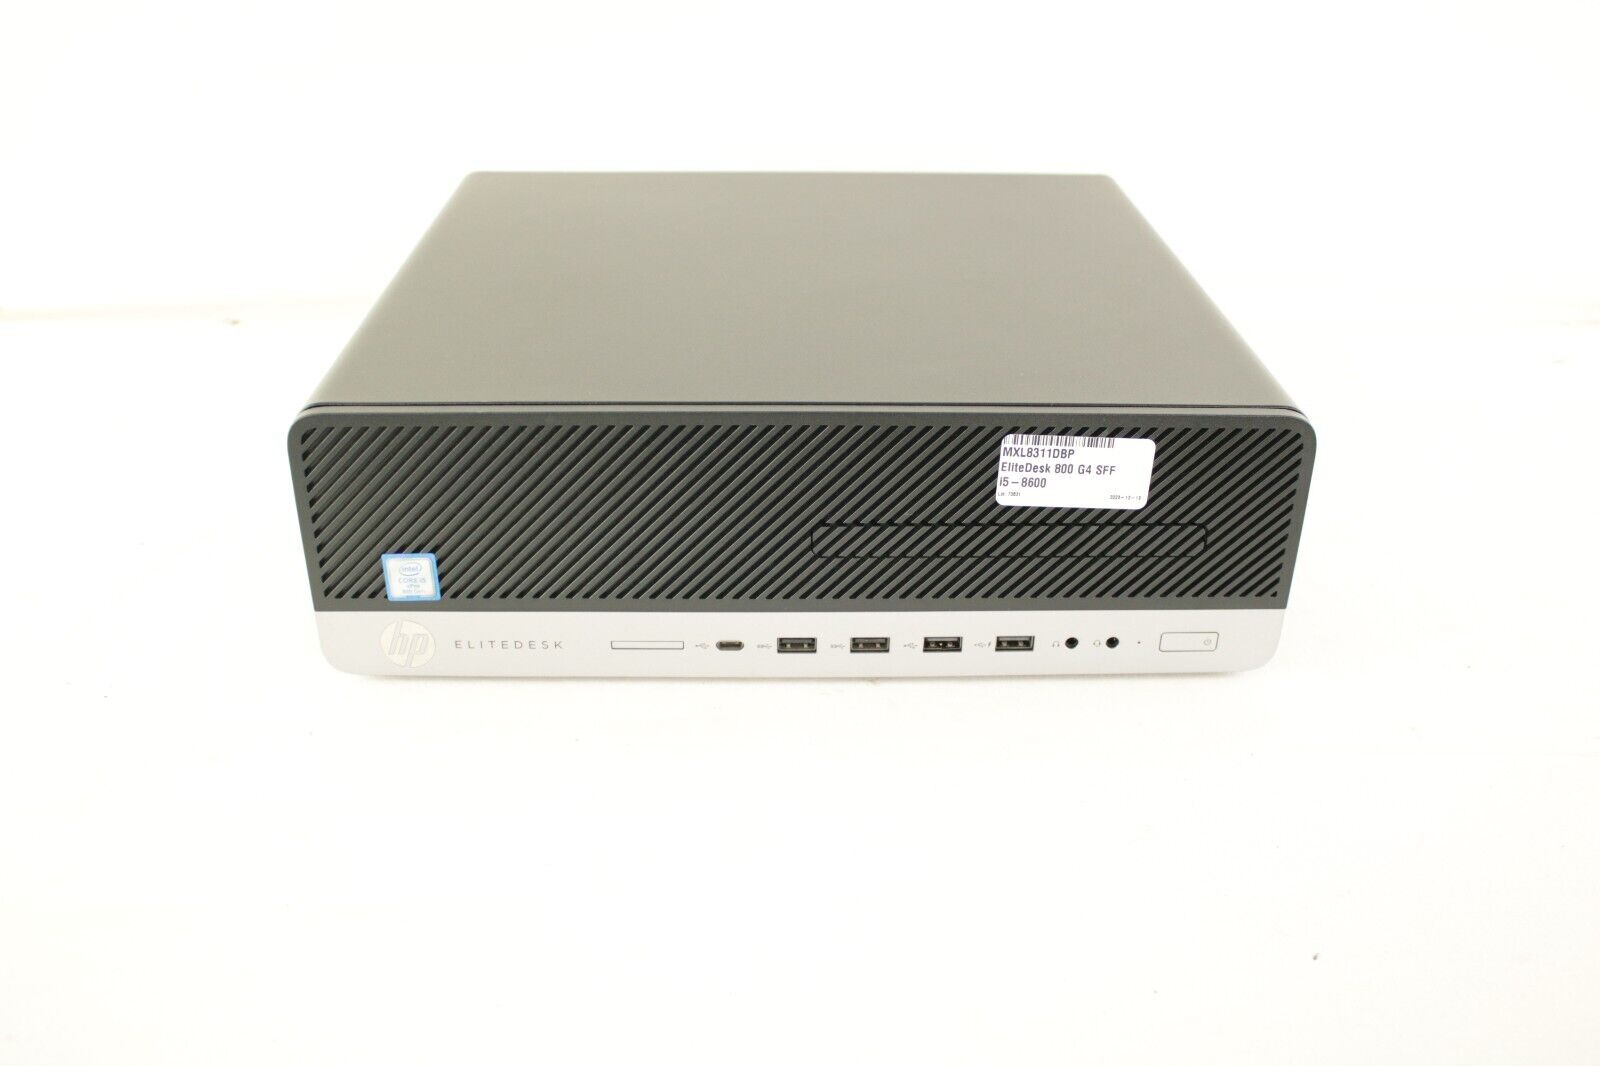 HP EliteDesk 800 G4 SFF w/ Core i5-8600 CPU @3.1GHz - 8GB RAM - No HDD/SSD or OS